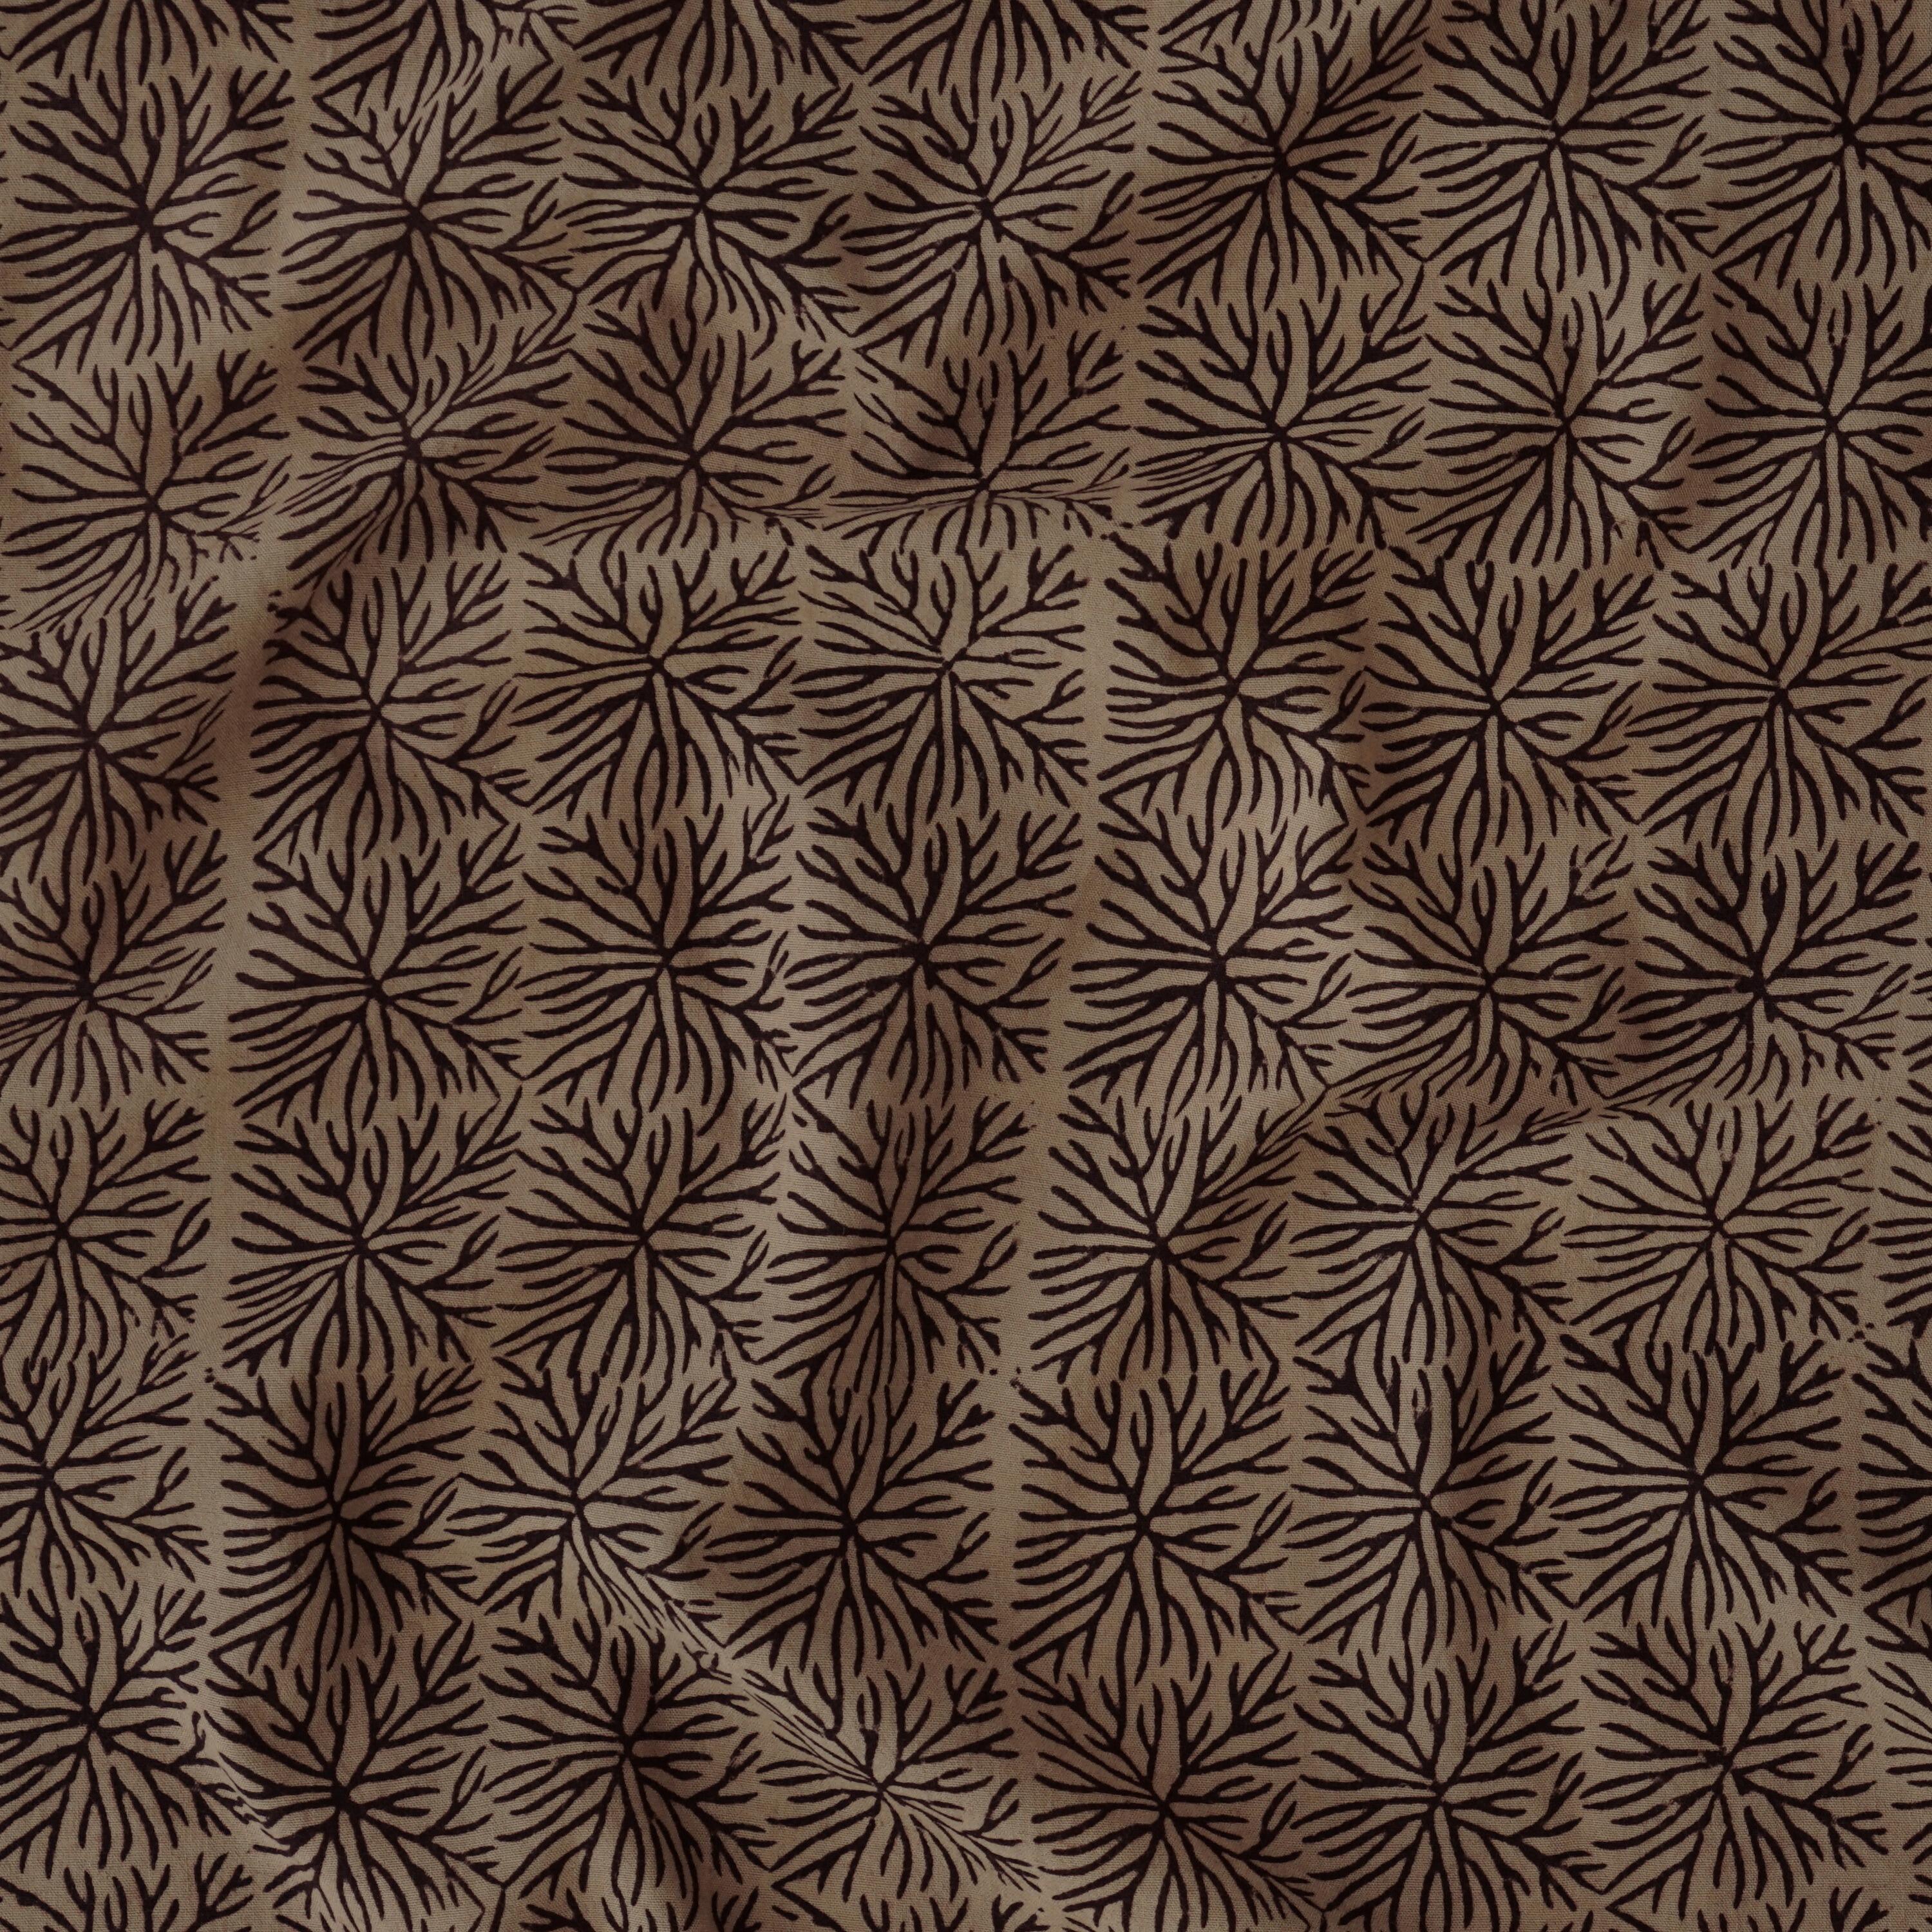 100% Block-Printed Cotton Fabric From India- Bagh - Iron Rust Black & Indigosol Khaki - Pagan Crown Print - Contrast